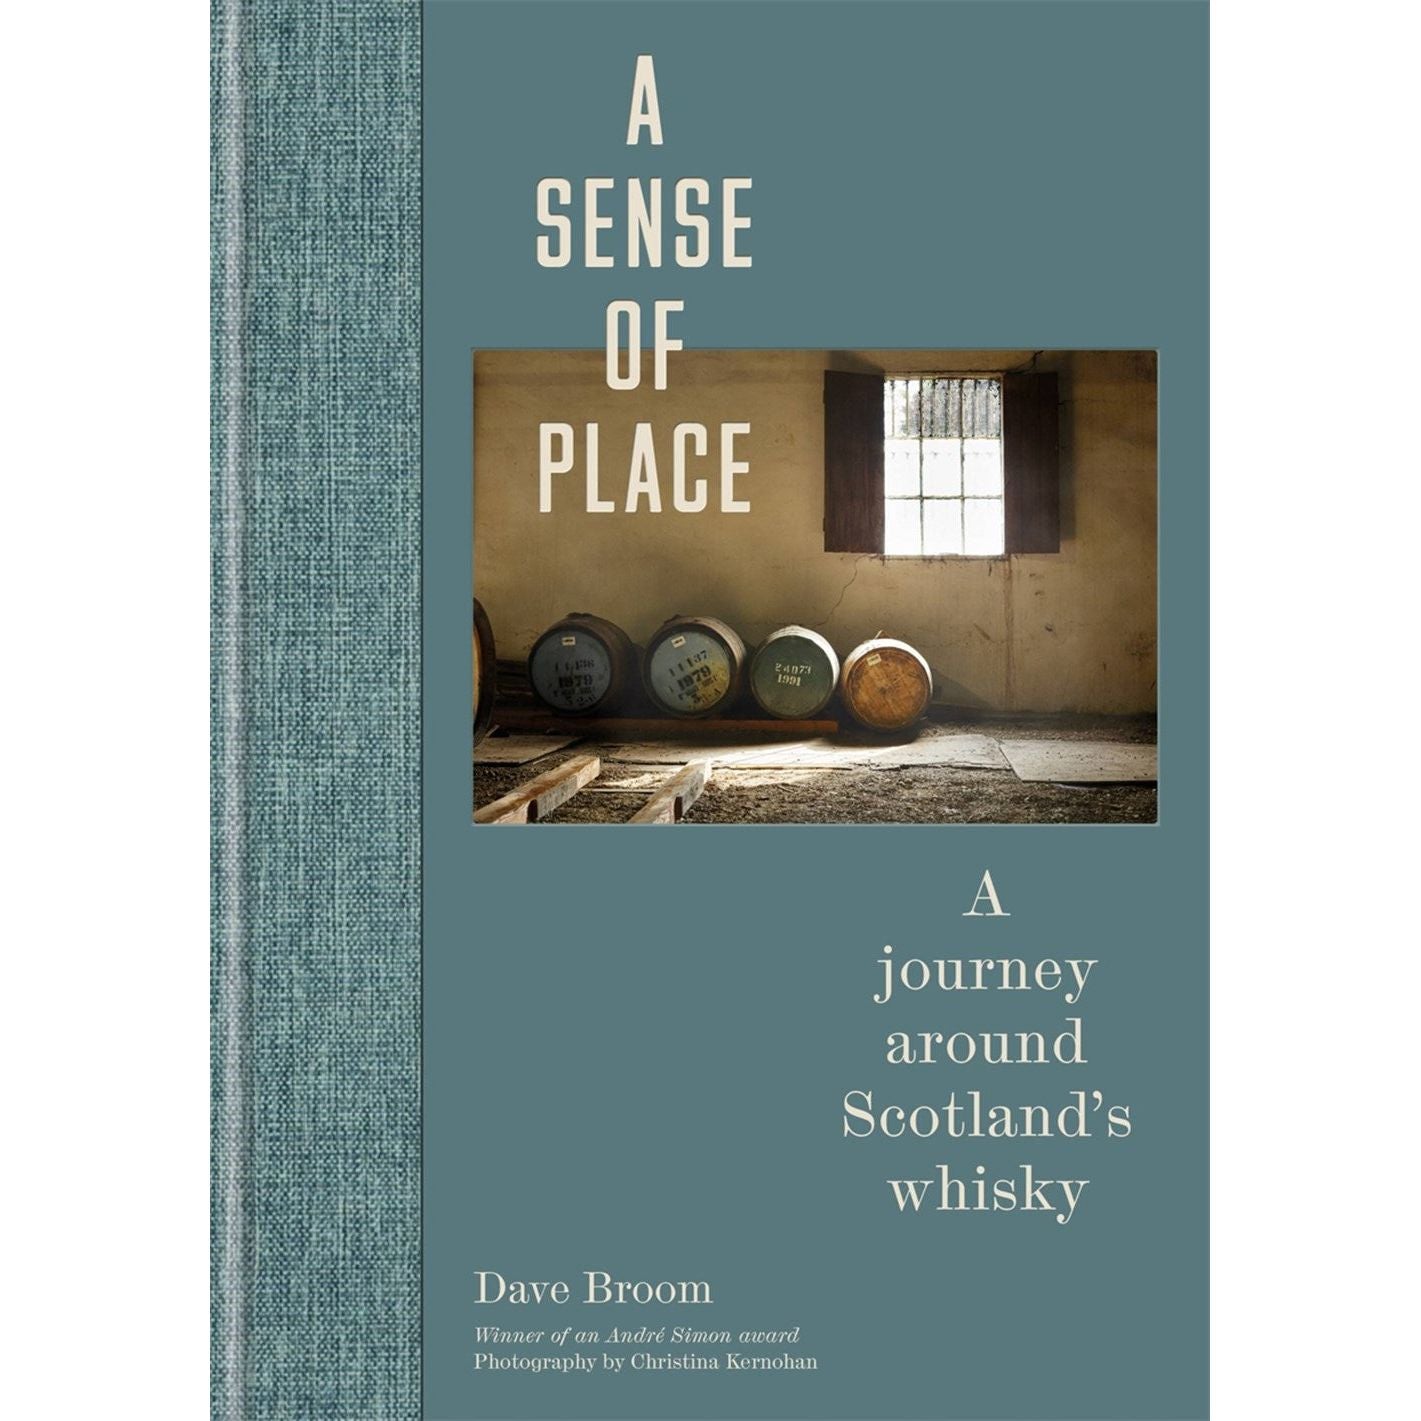 A Sense of Place (Dave Broom)